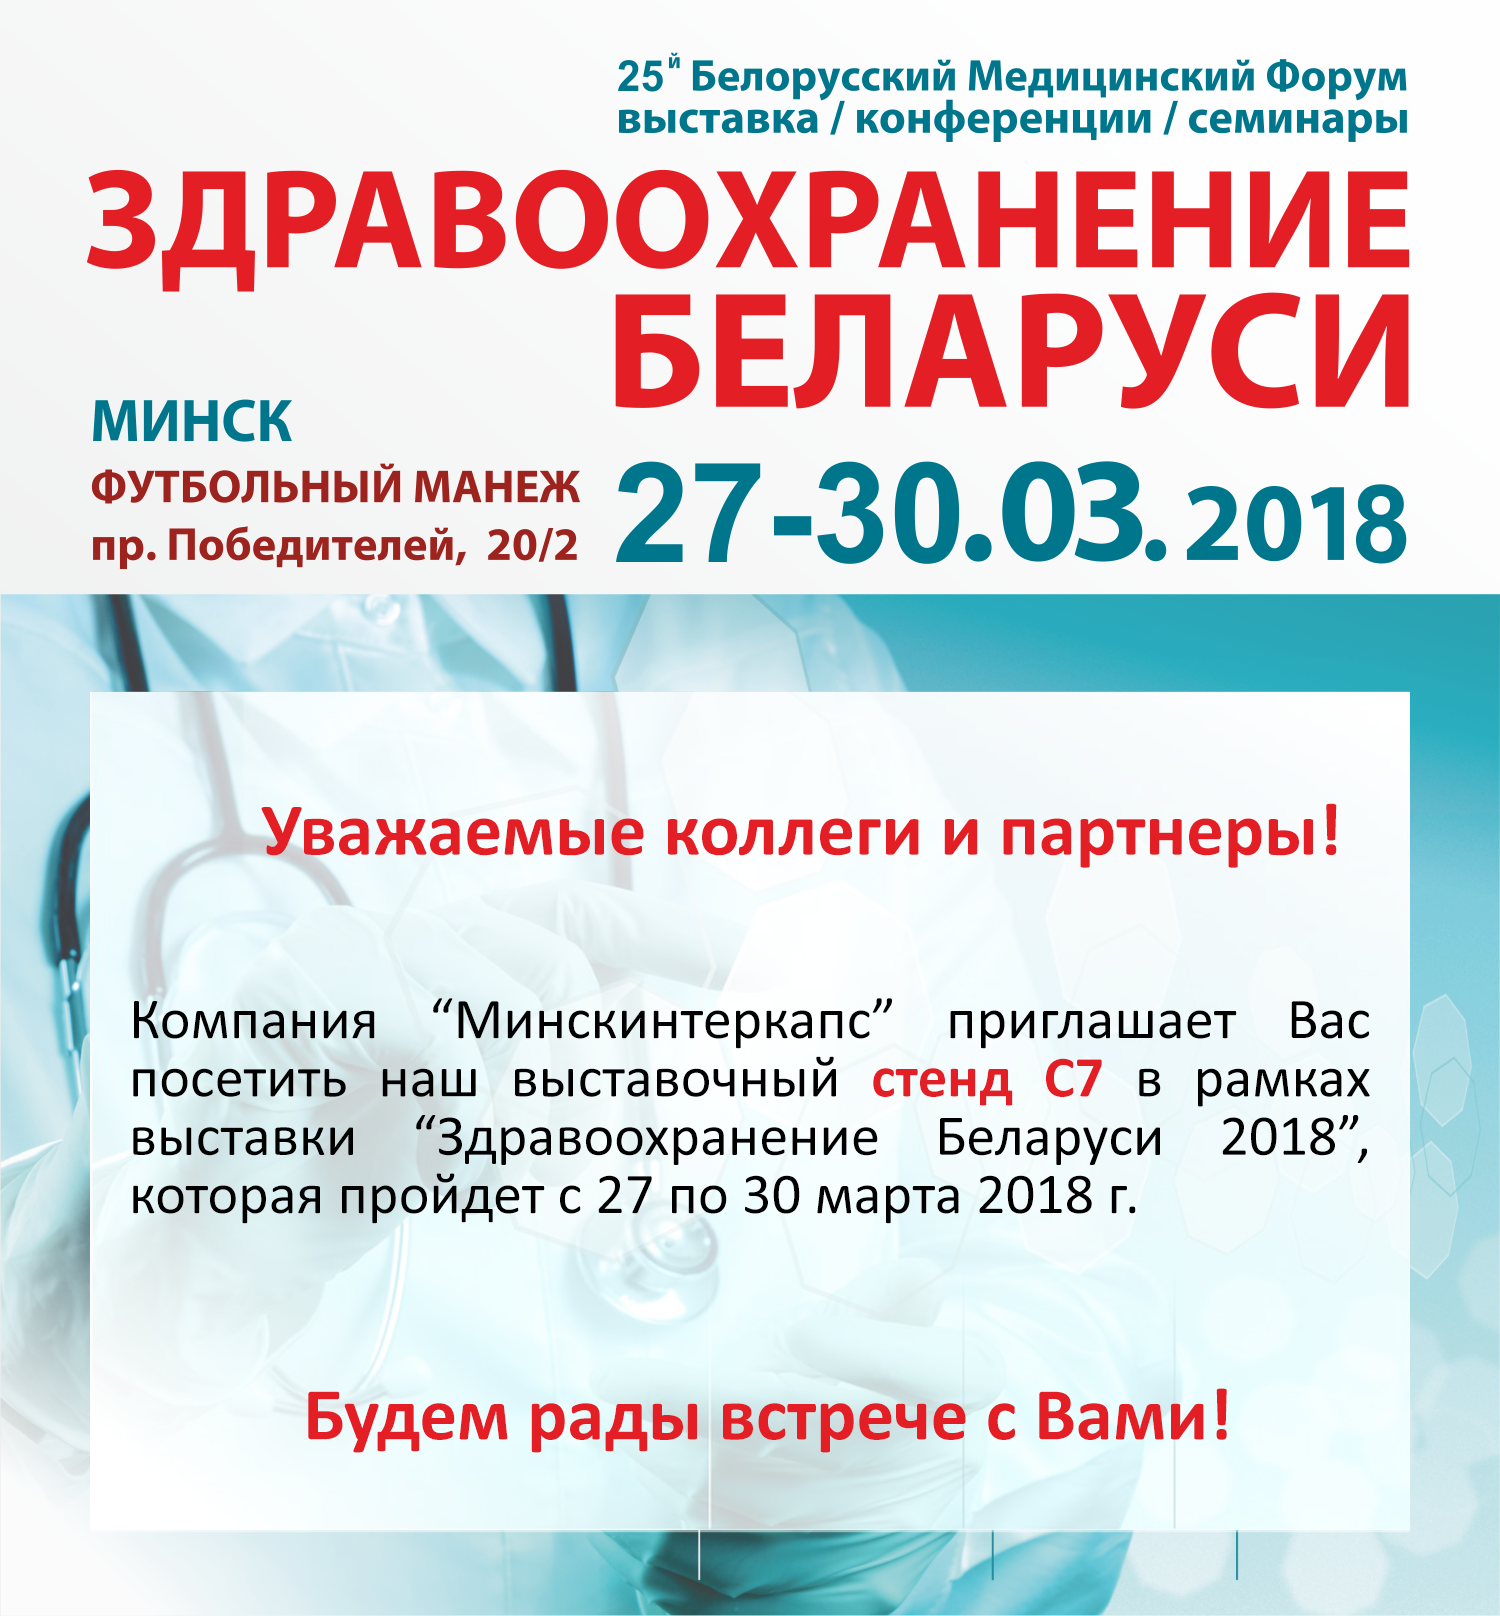 Выставка "Здравоохранение Беларуси 2018"